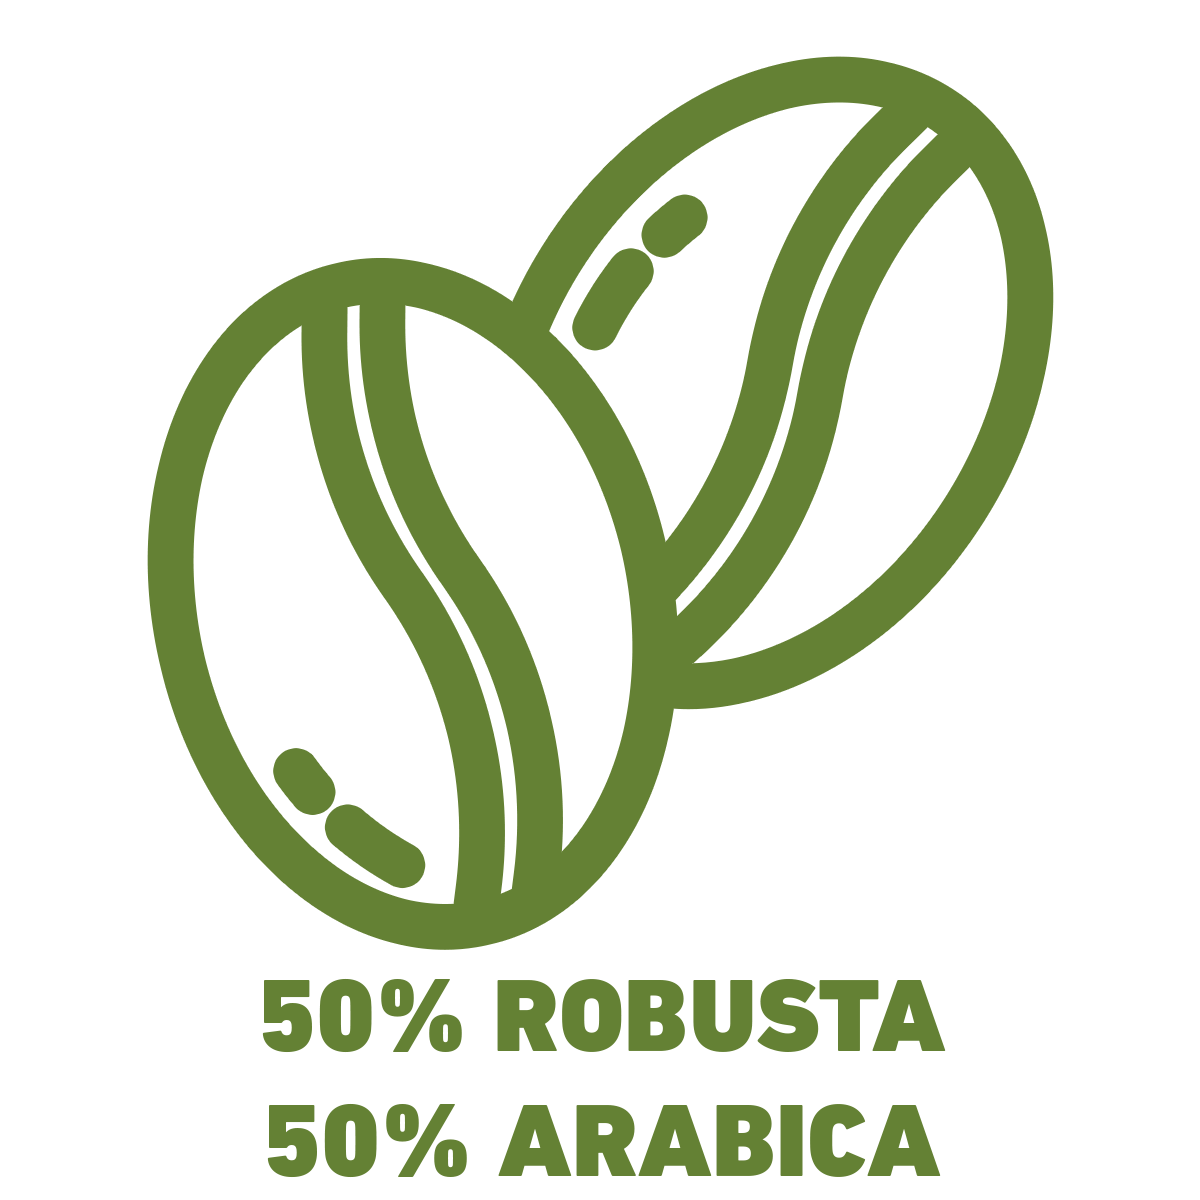 50% arabica 50% Robusta